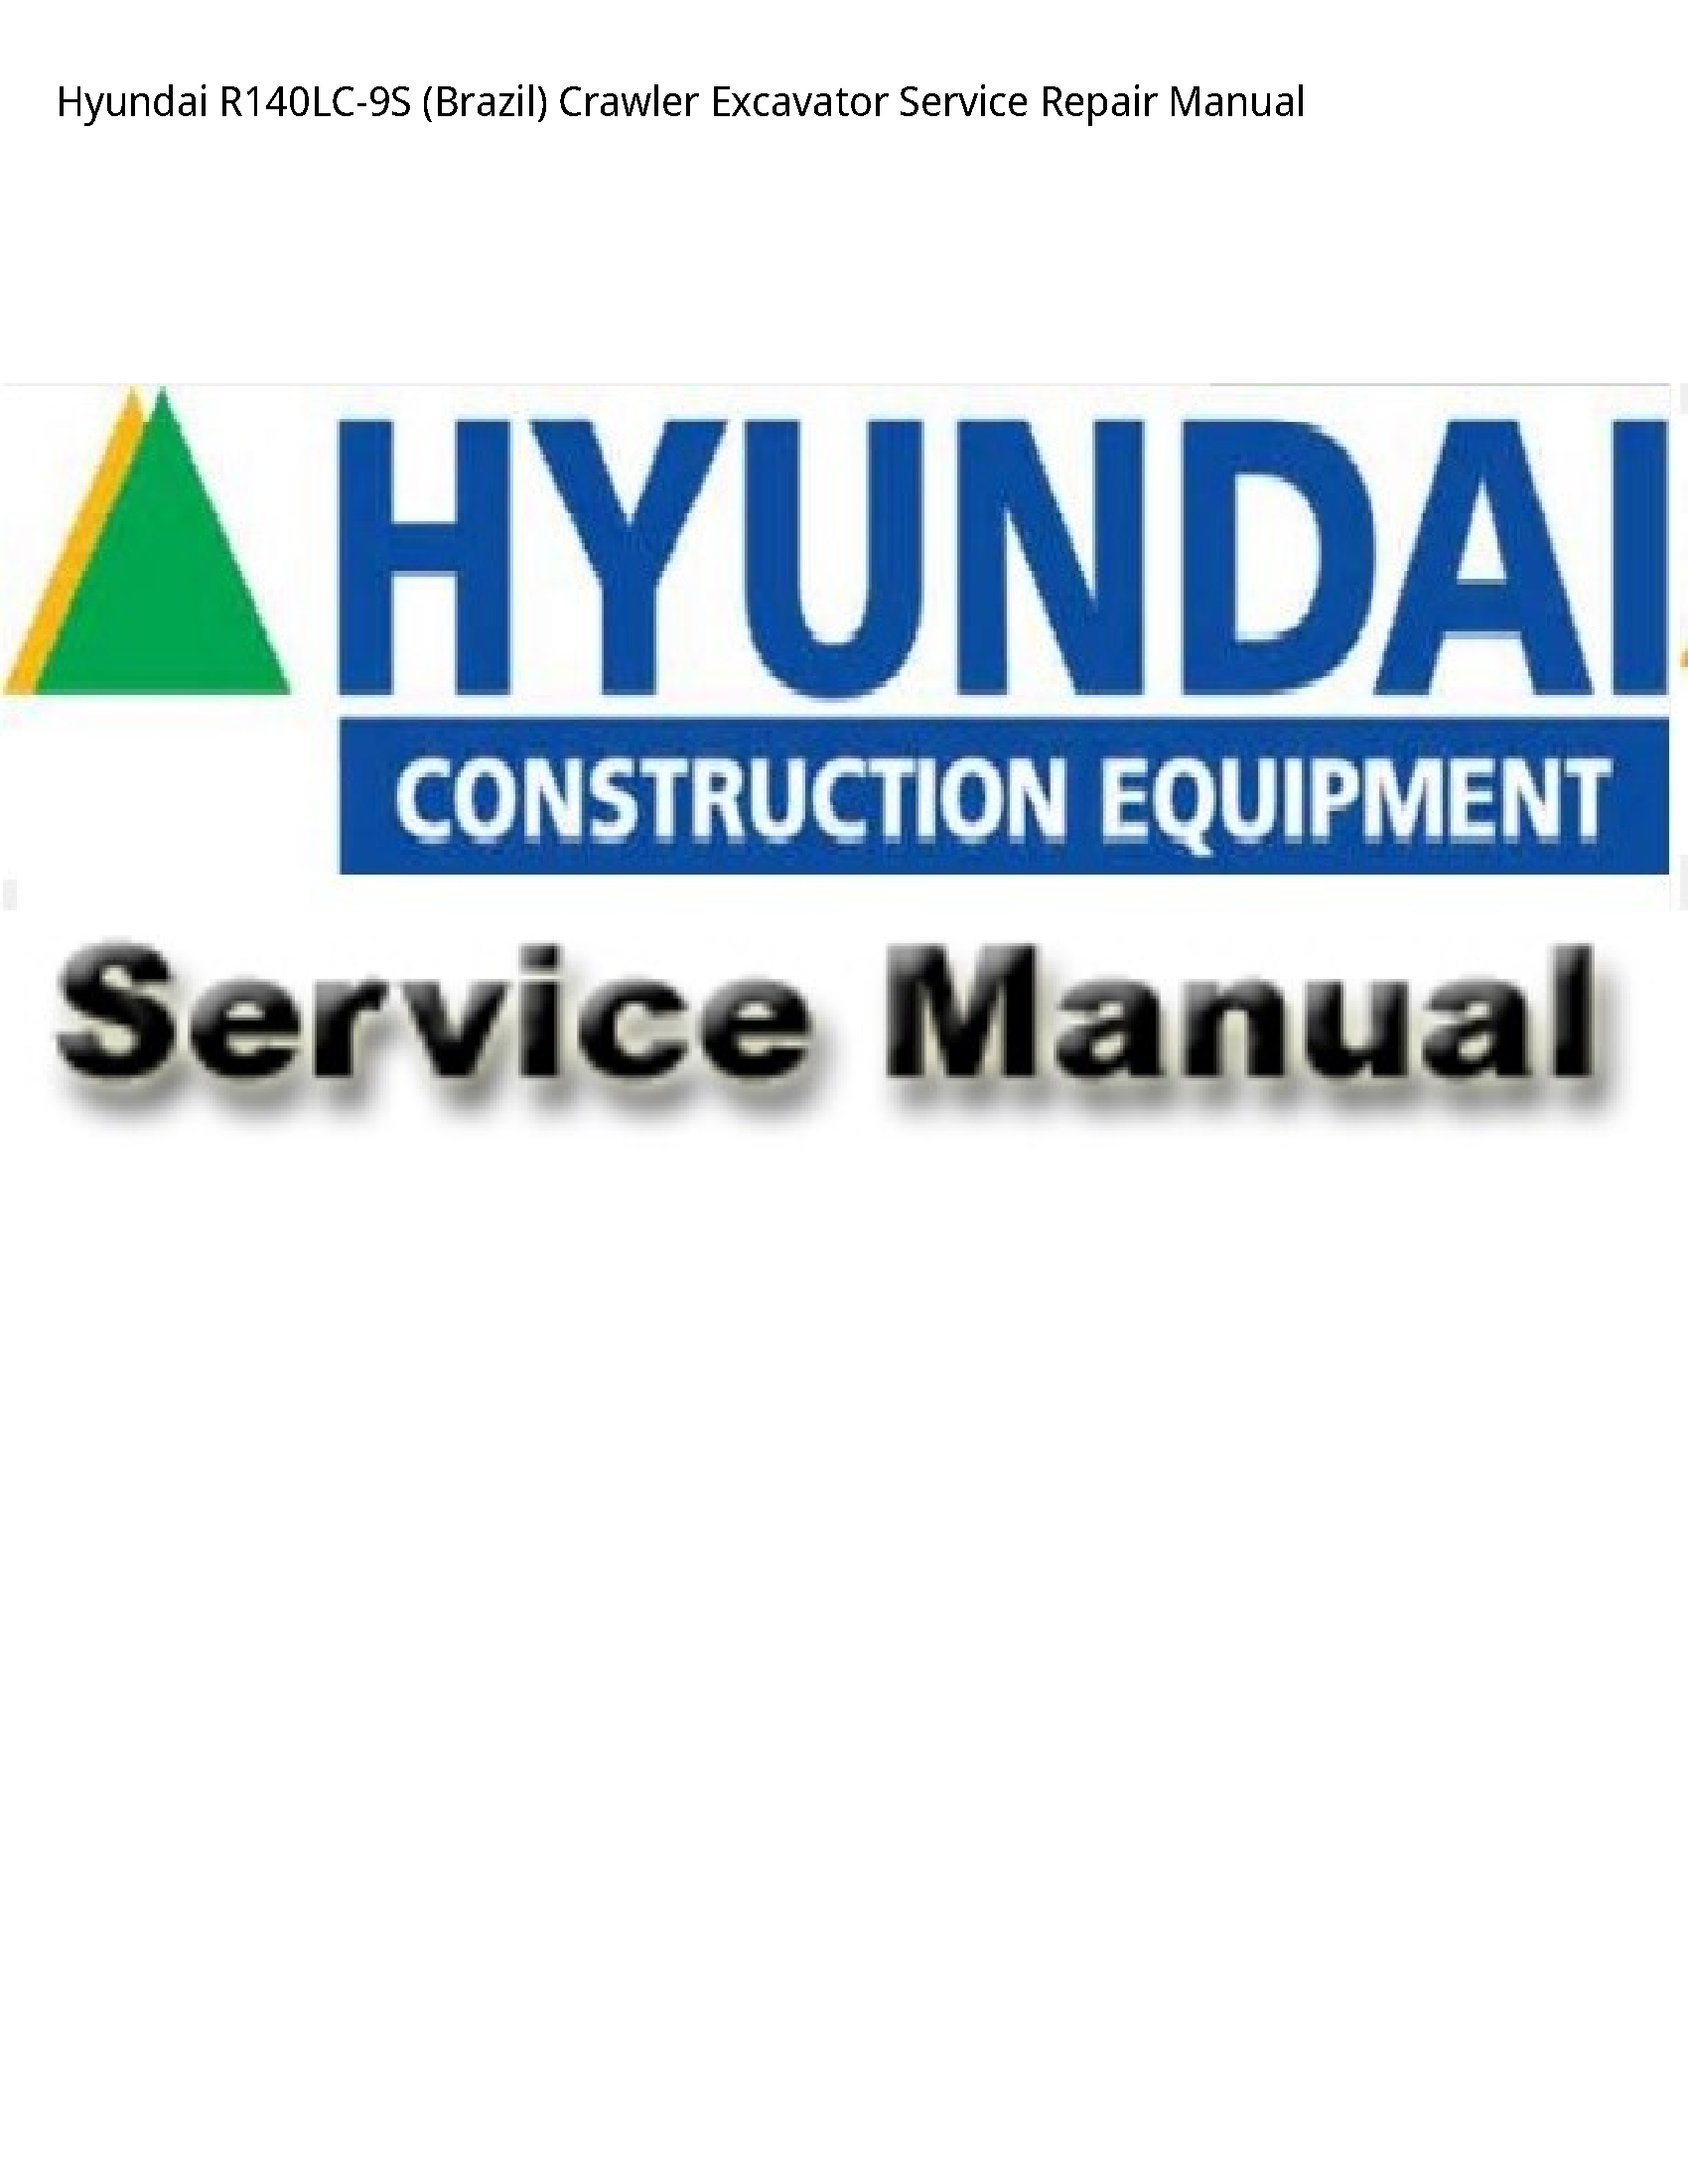 Hyundai R140LC-9S (Brazil) Crawler Excavator manual